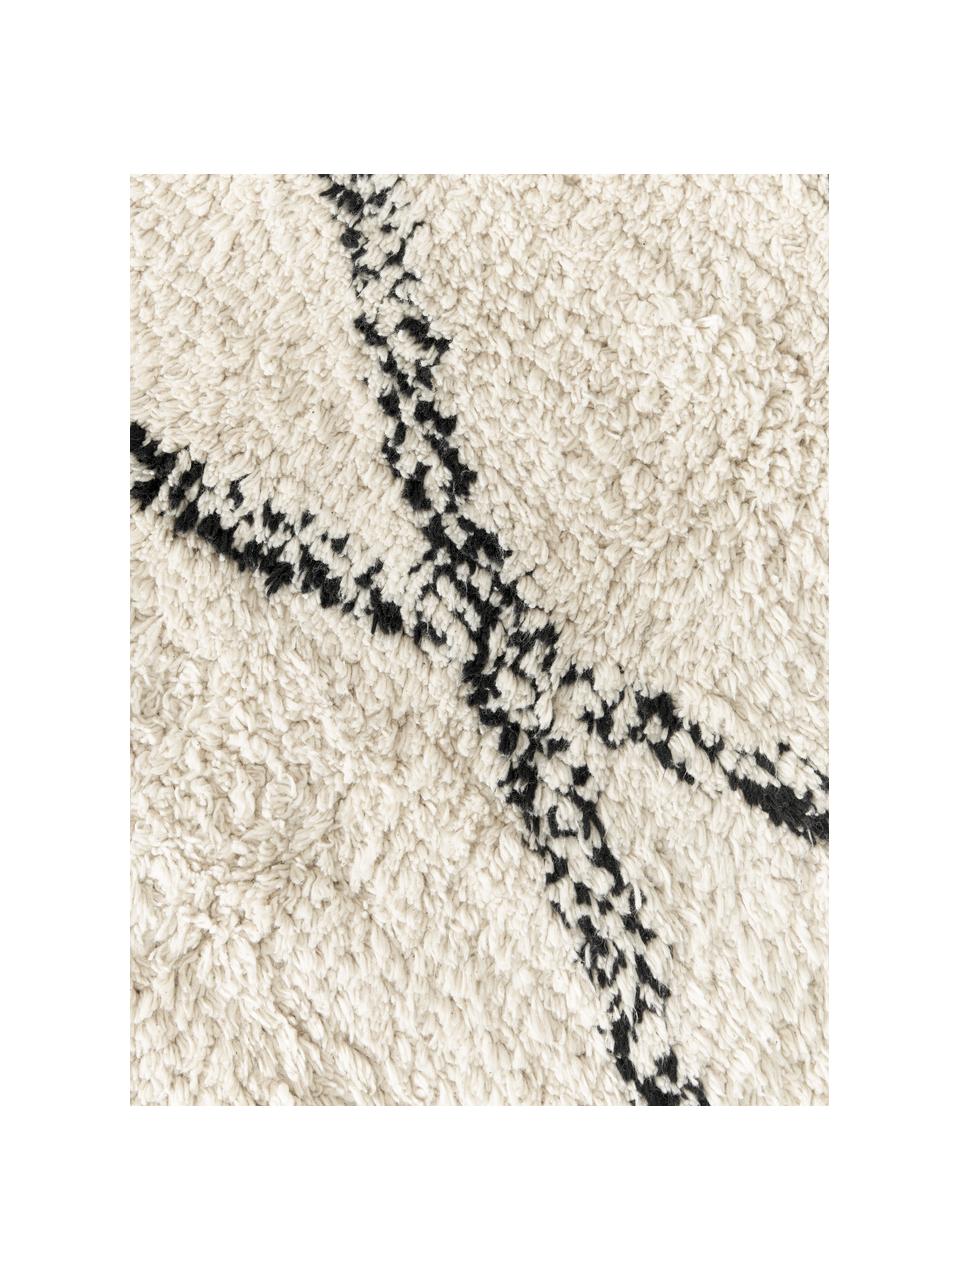 Alfombra redonda artesanal de algodón Bina, 100% algodón, Beige, negro, Ø 110 cm (Tamaño S)